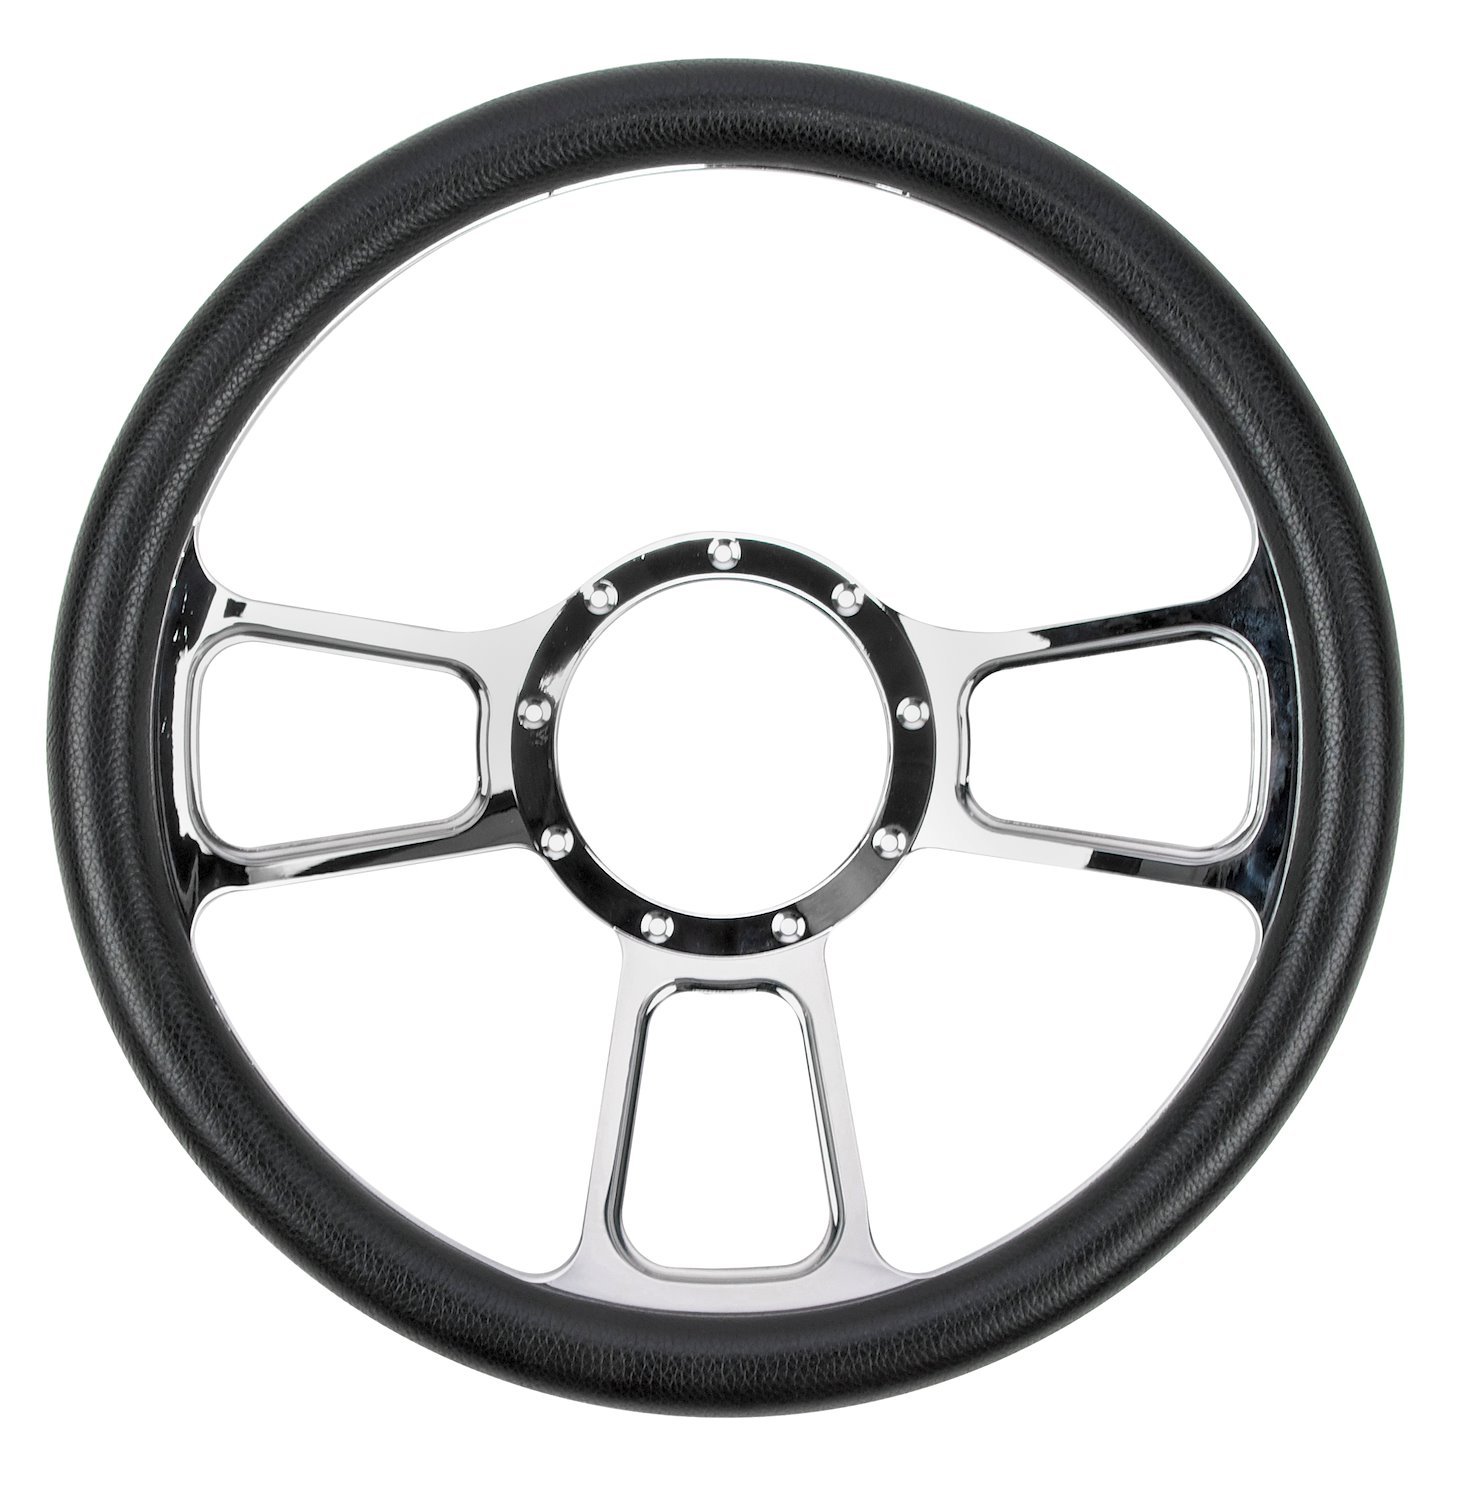 Chrome-Plated Billet Aluminum 14 in. Steering Wheel [Lunar Spoke Design]